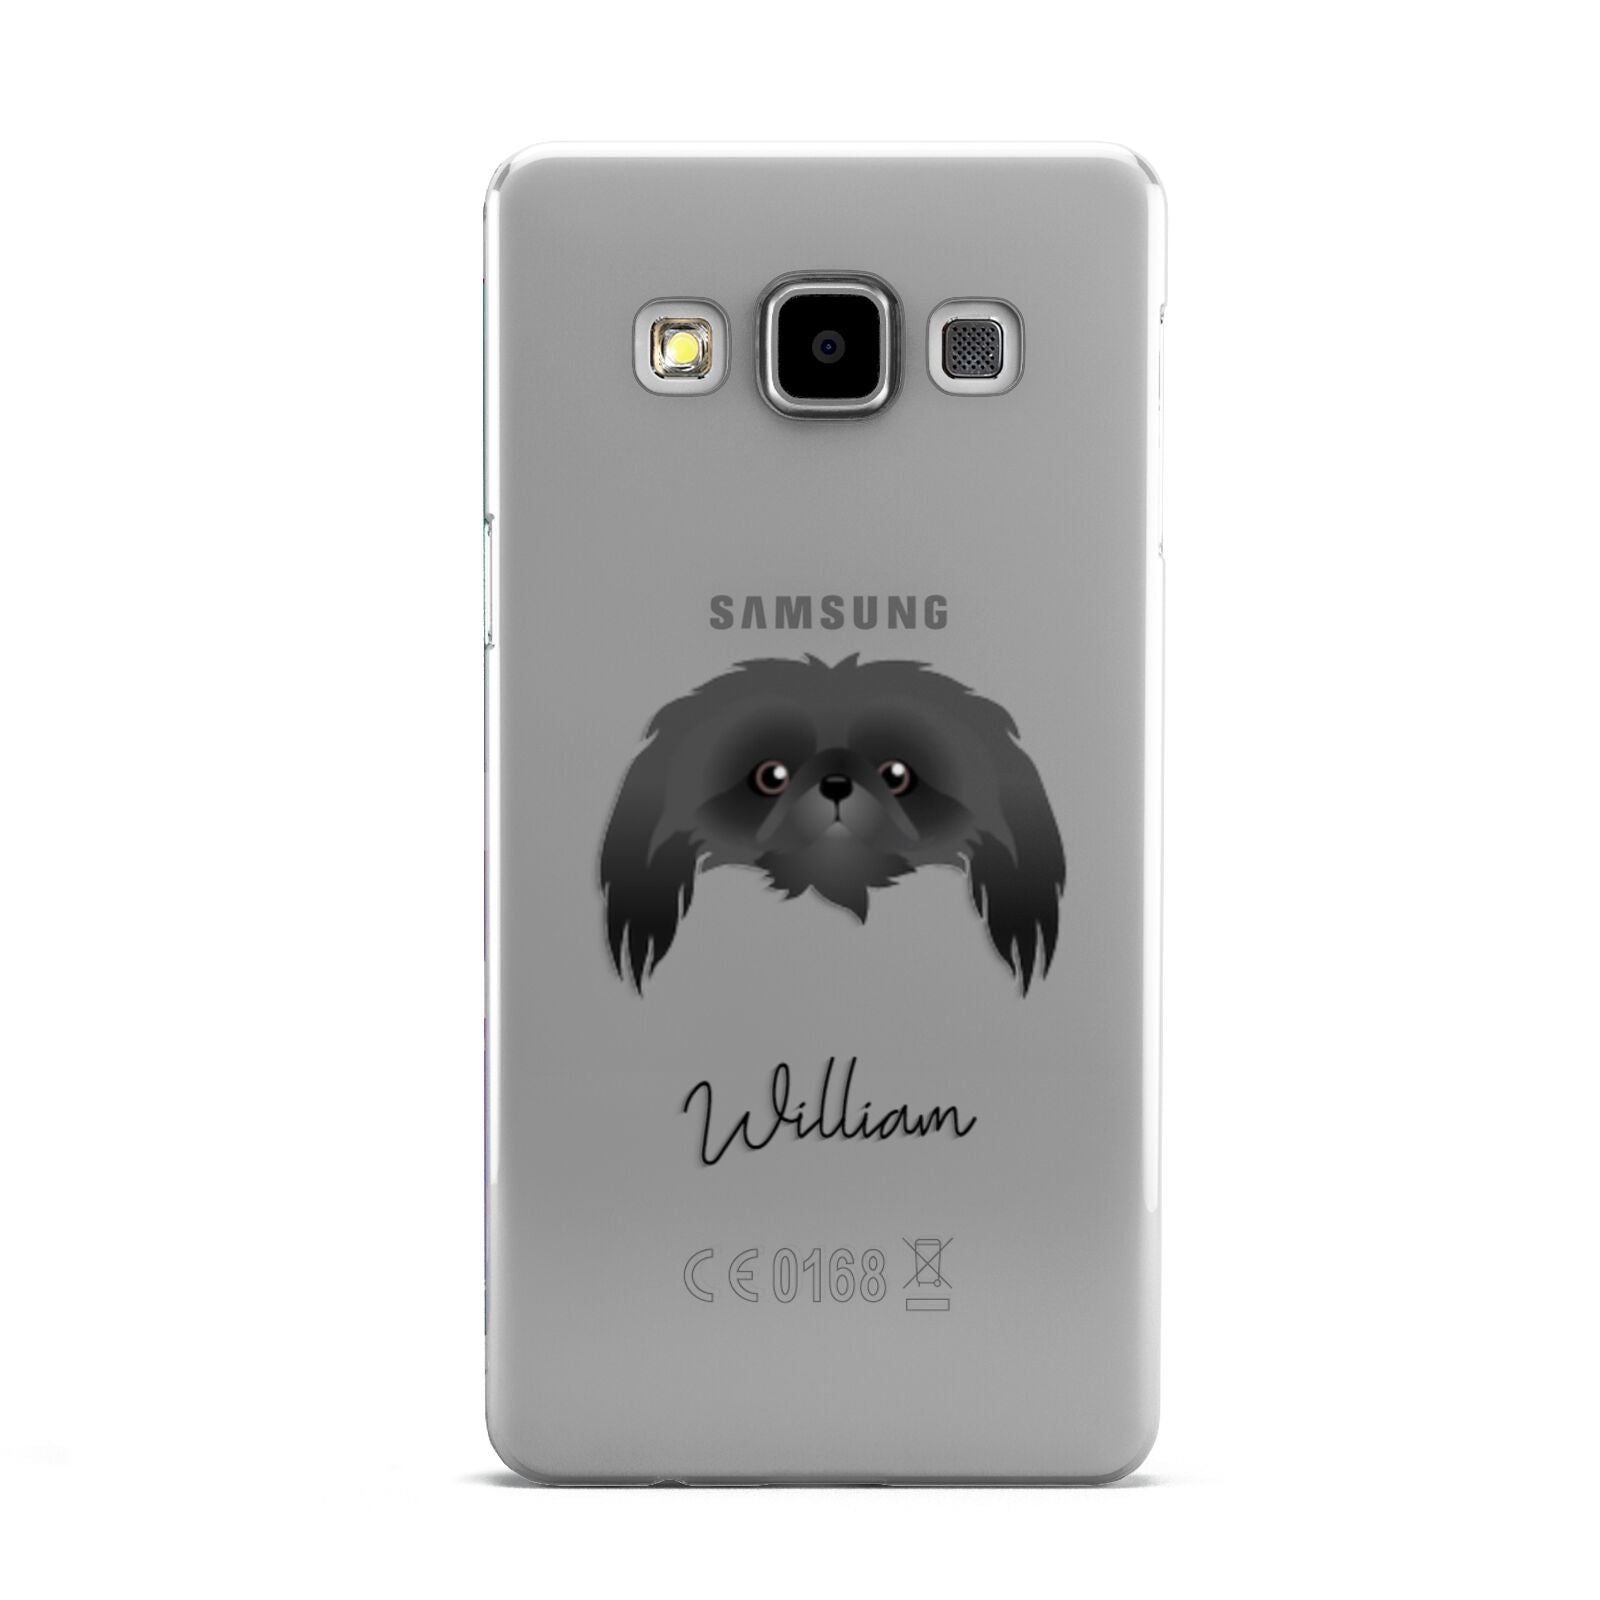 Pekingese Personalised Samsung Galaxy A5 Case